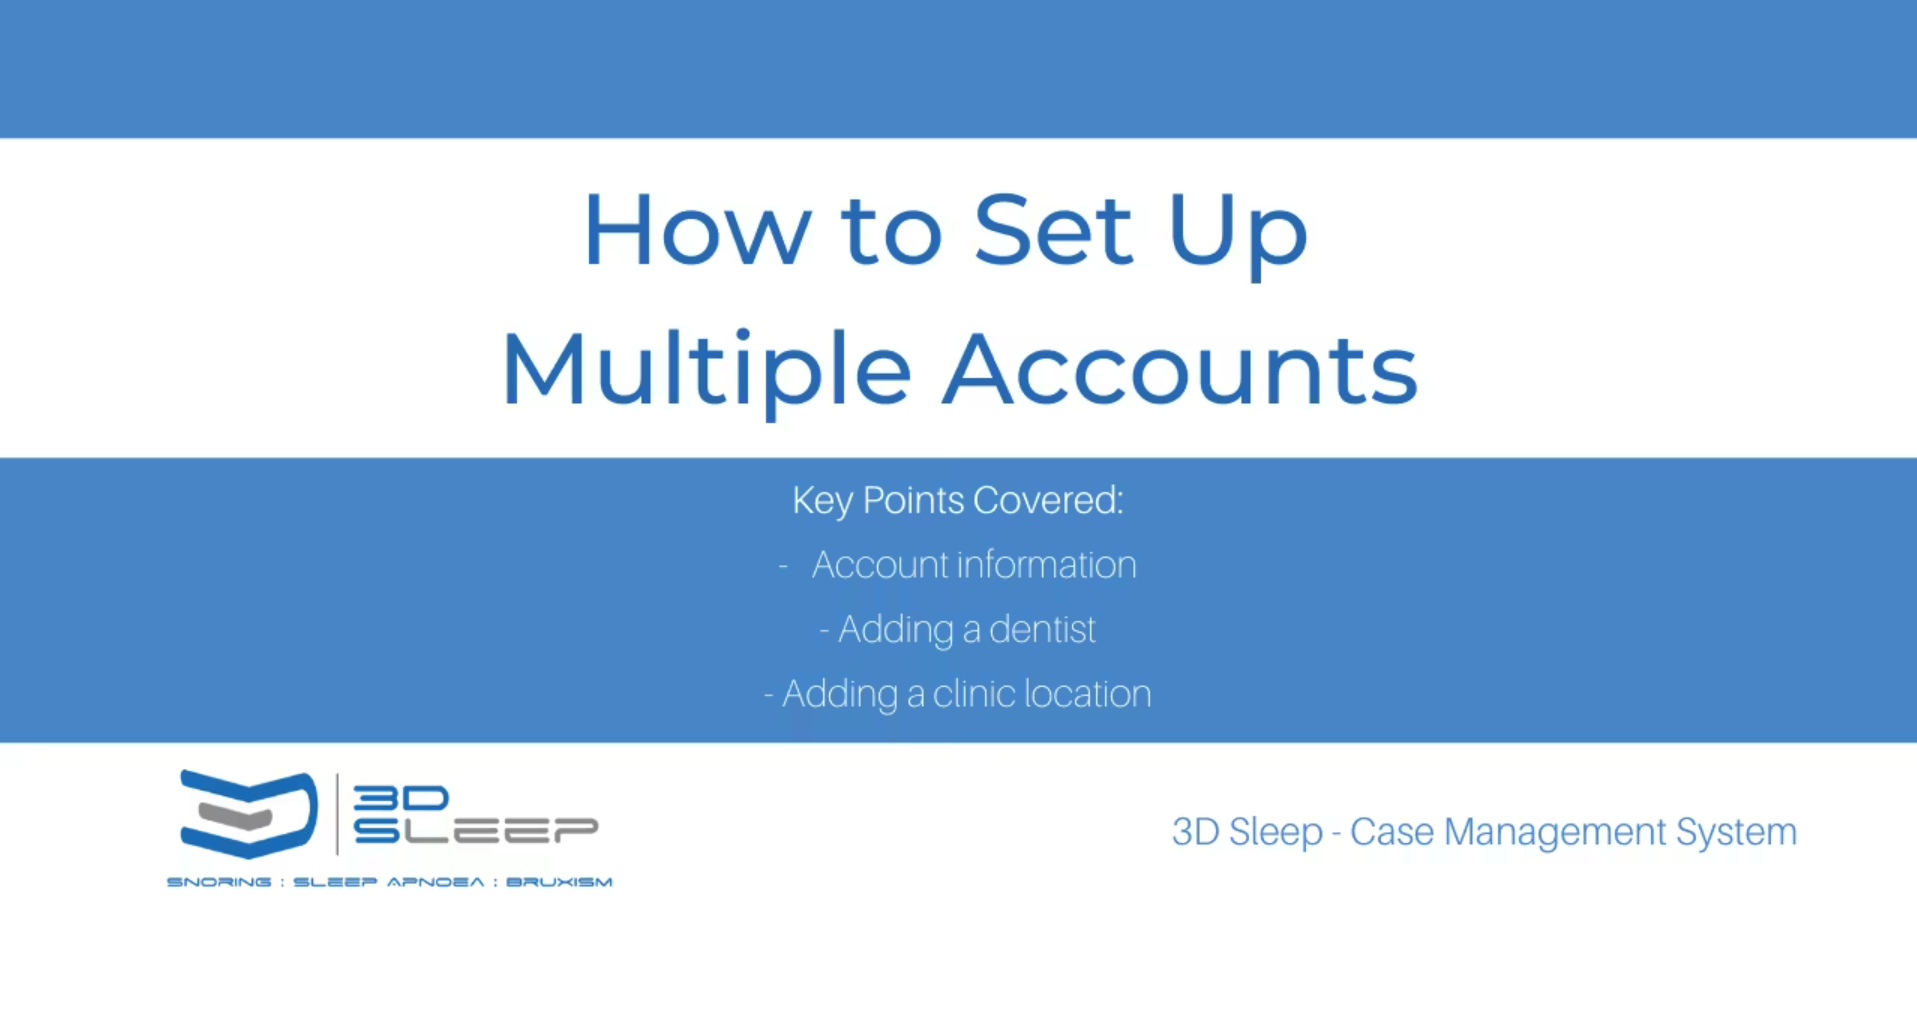 2. How to Set Up Multiple Accounts (Laboratory & Diagnostics)